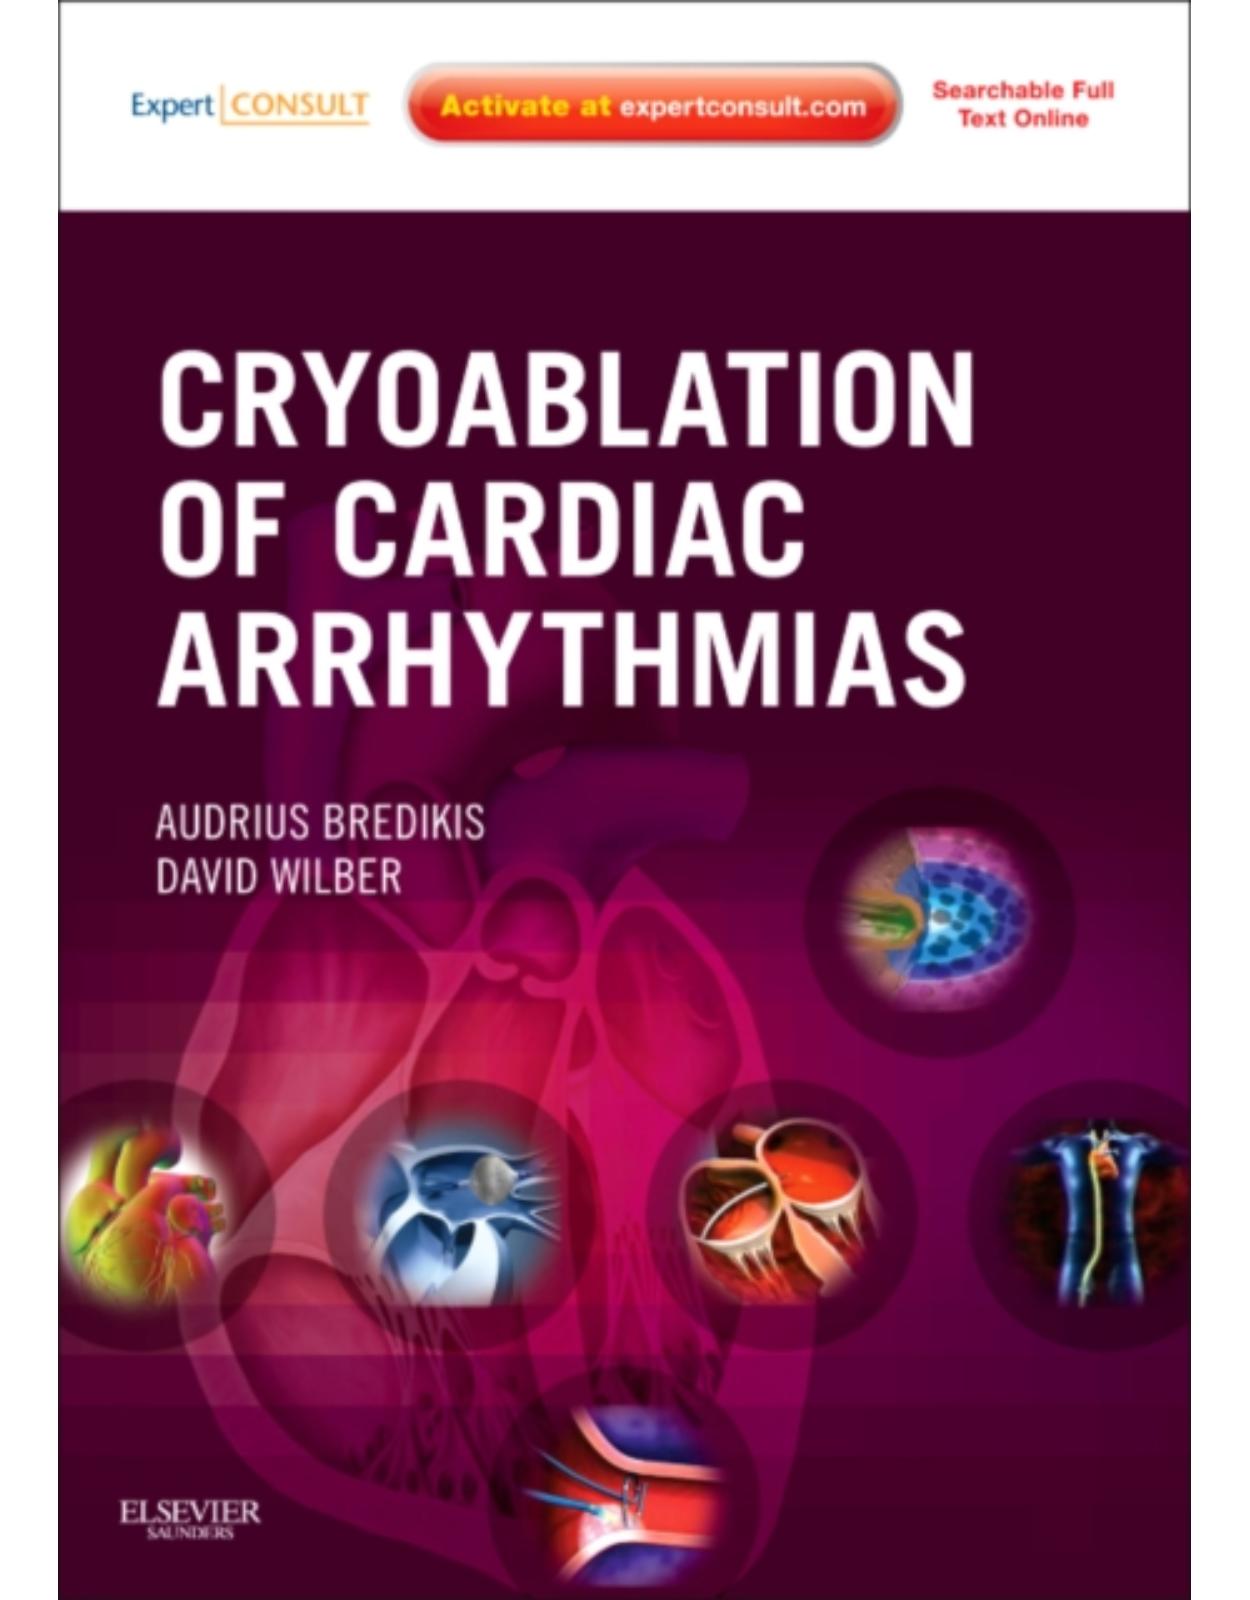 Cryoablation of Cardiac Arrhythmias: Expert Consult - Online and Print